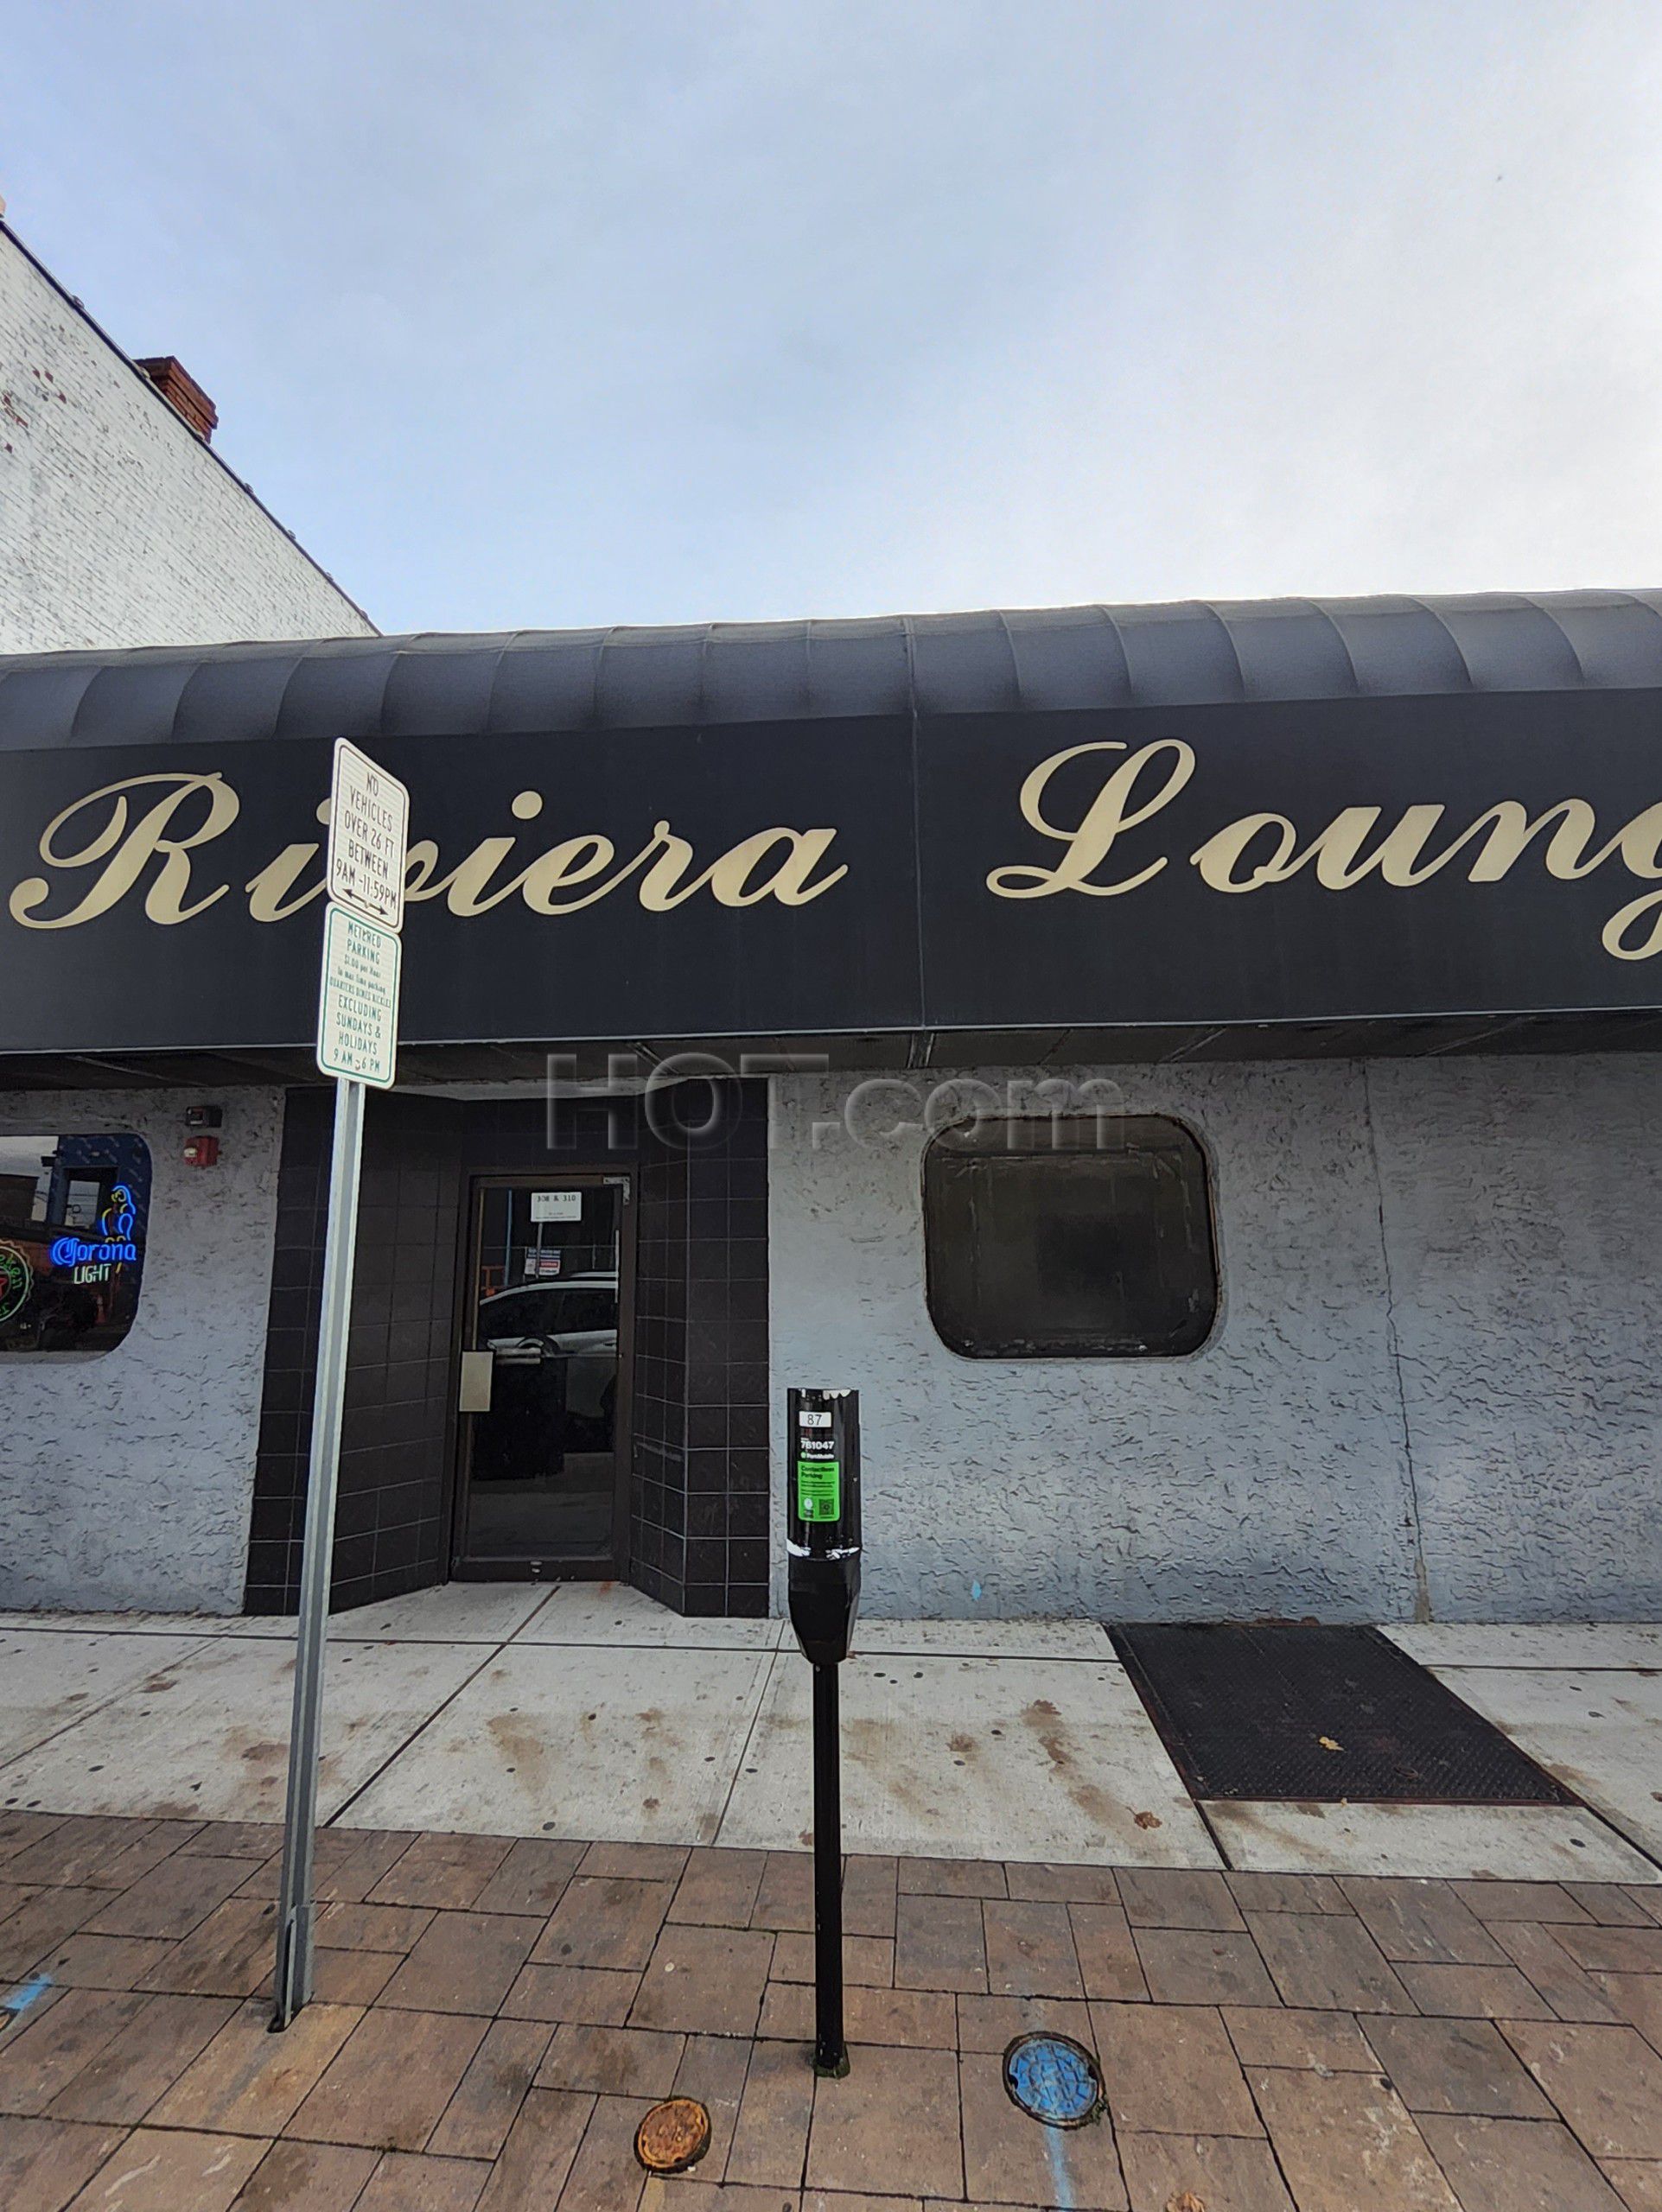 Hackensack, New Jersey Riviera Lounge